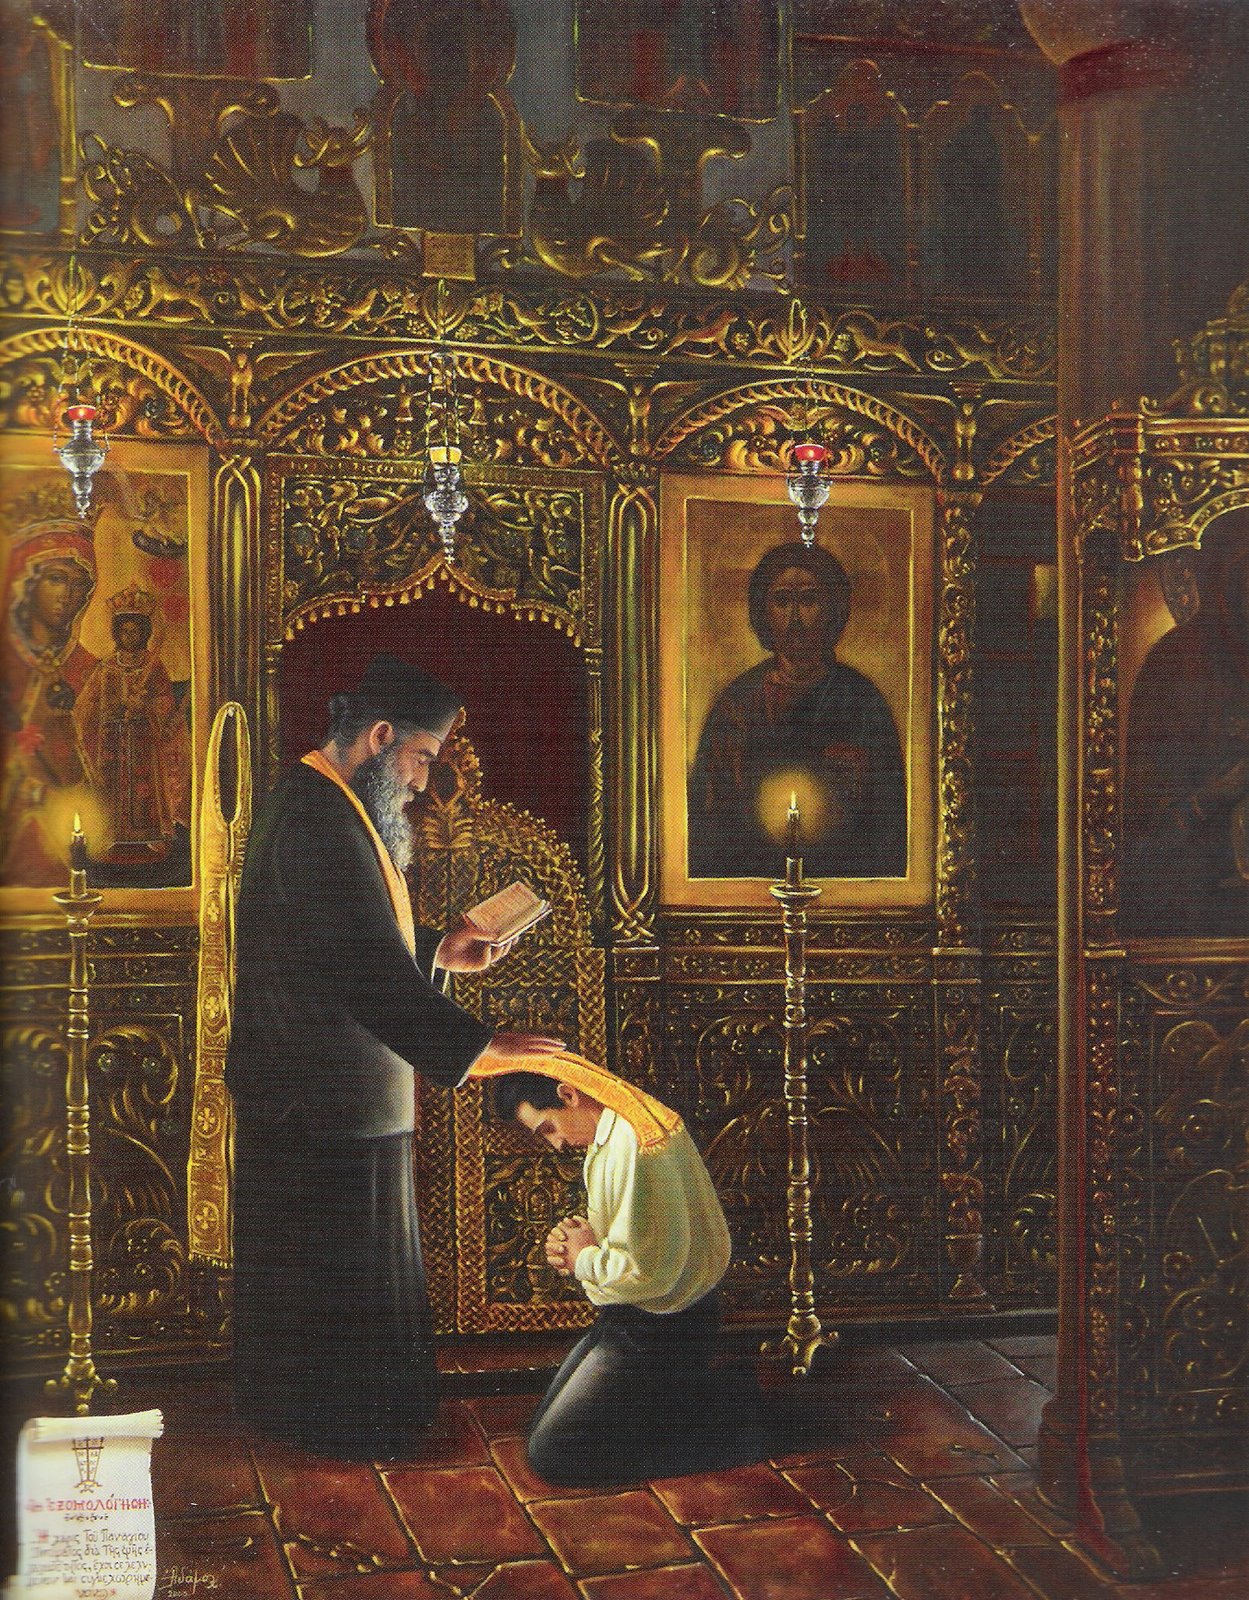 https://draltang.files.wordpress.com/2008/09/orthodox-priest_confessionjpg.jpg